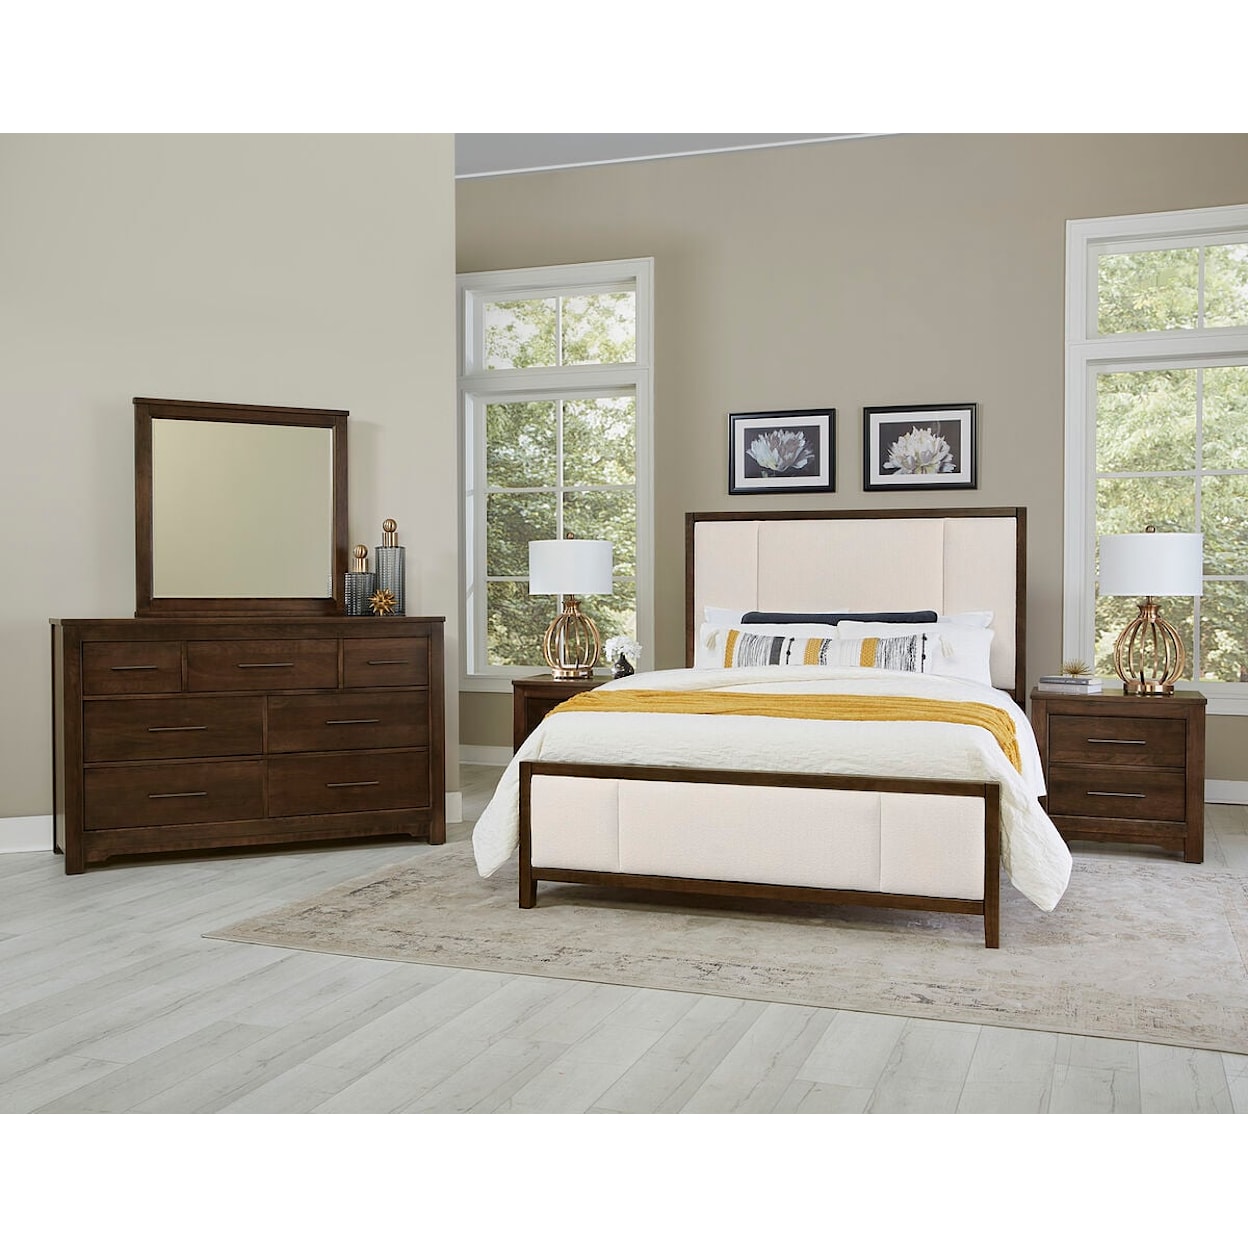 Vaughan Bassett Crafted Cherry - Dark Upholstered California King Bedroom Set